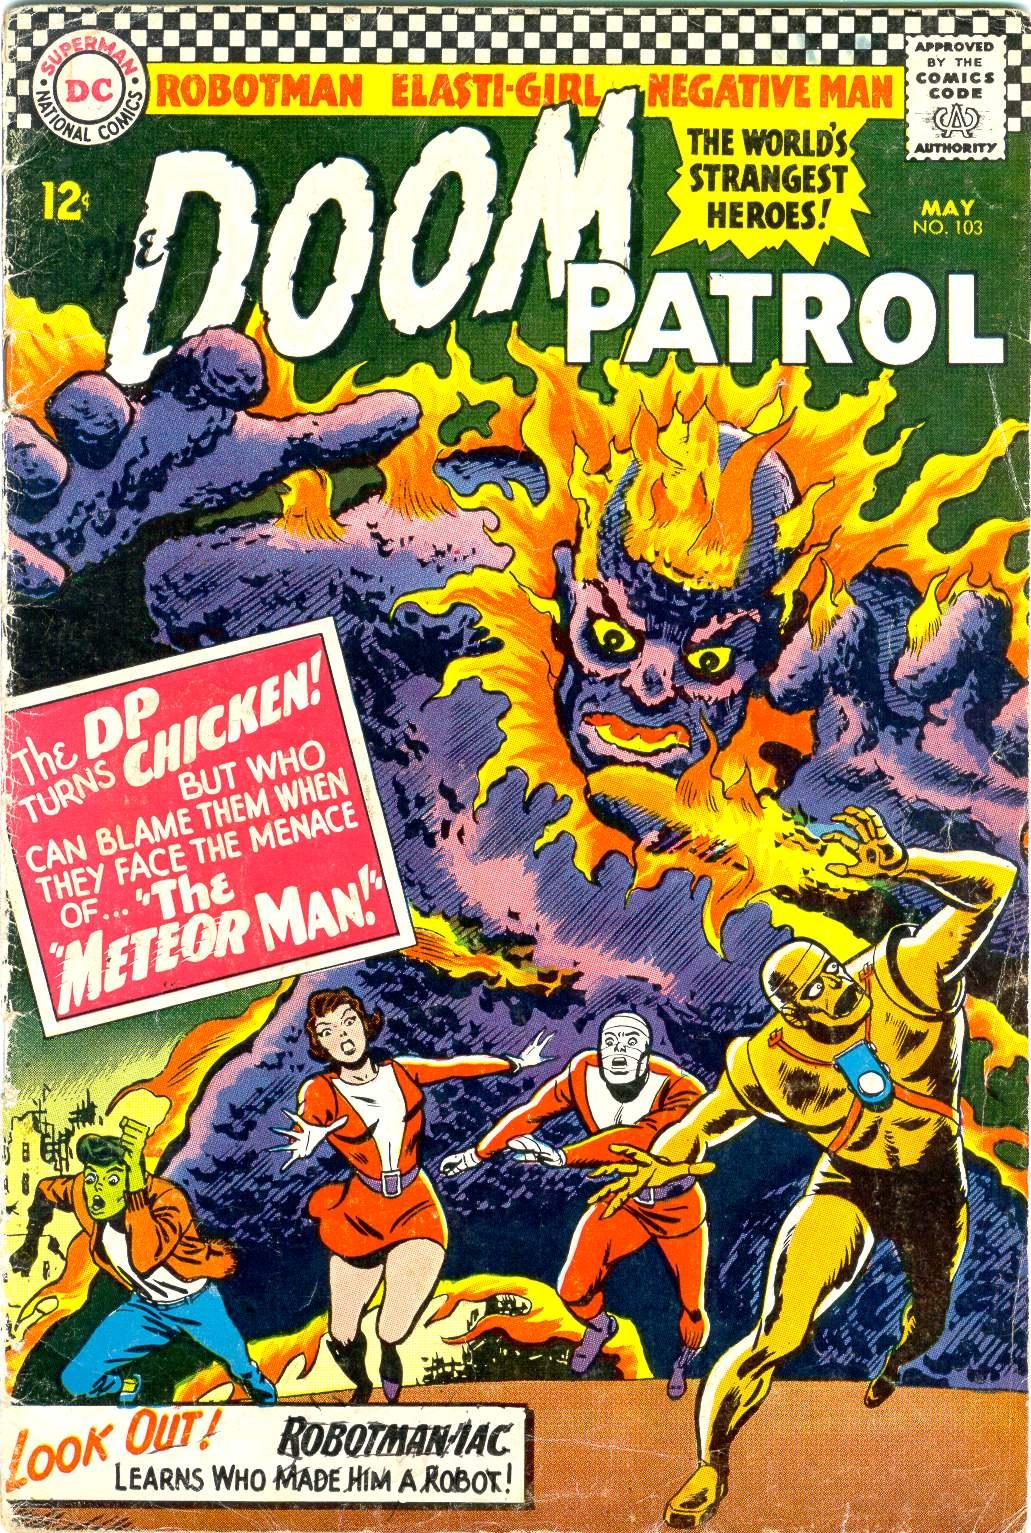 Doom Patrol Vol. 1 #103